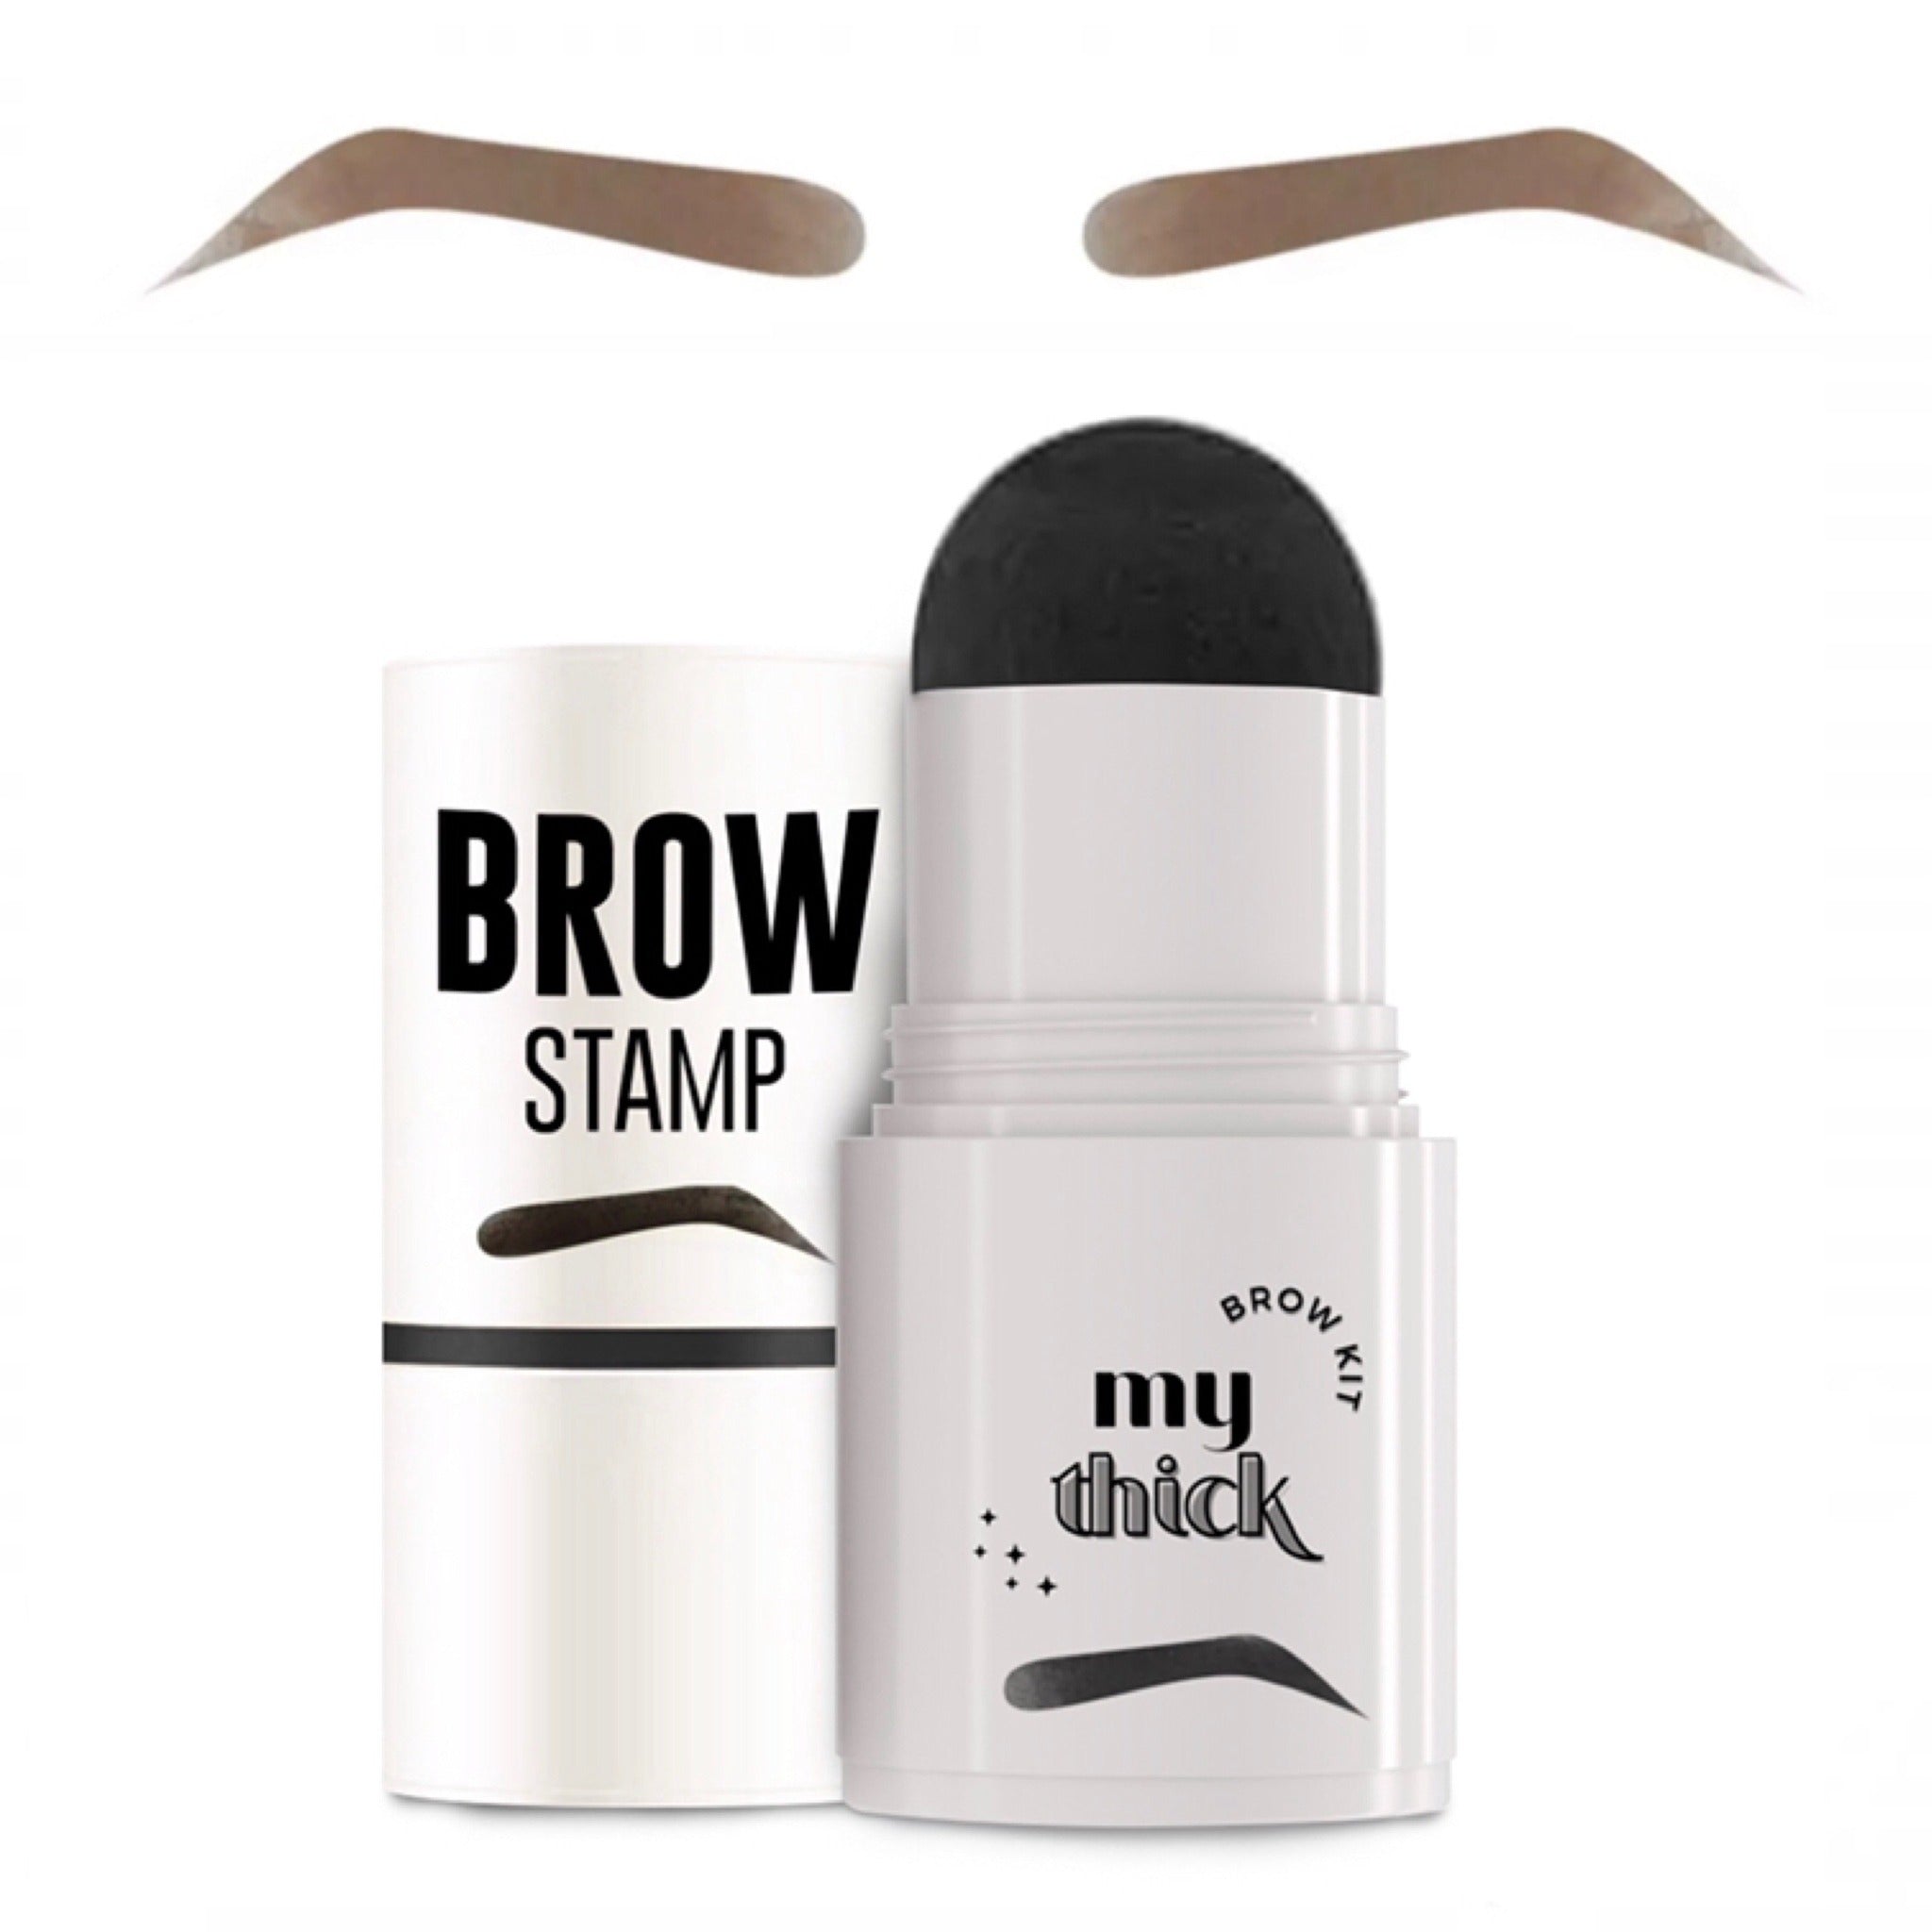 MYTHICKBROWKIT Eyebrow Stamp & Stencil Kit